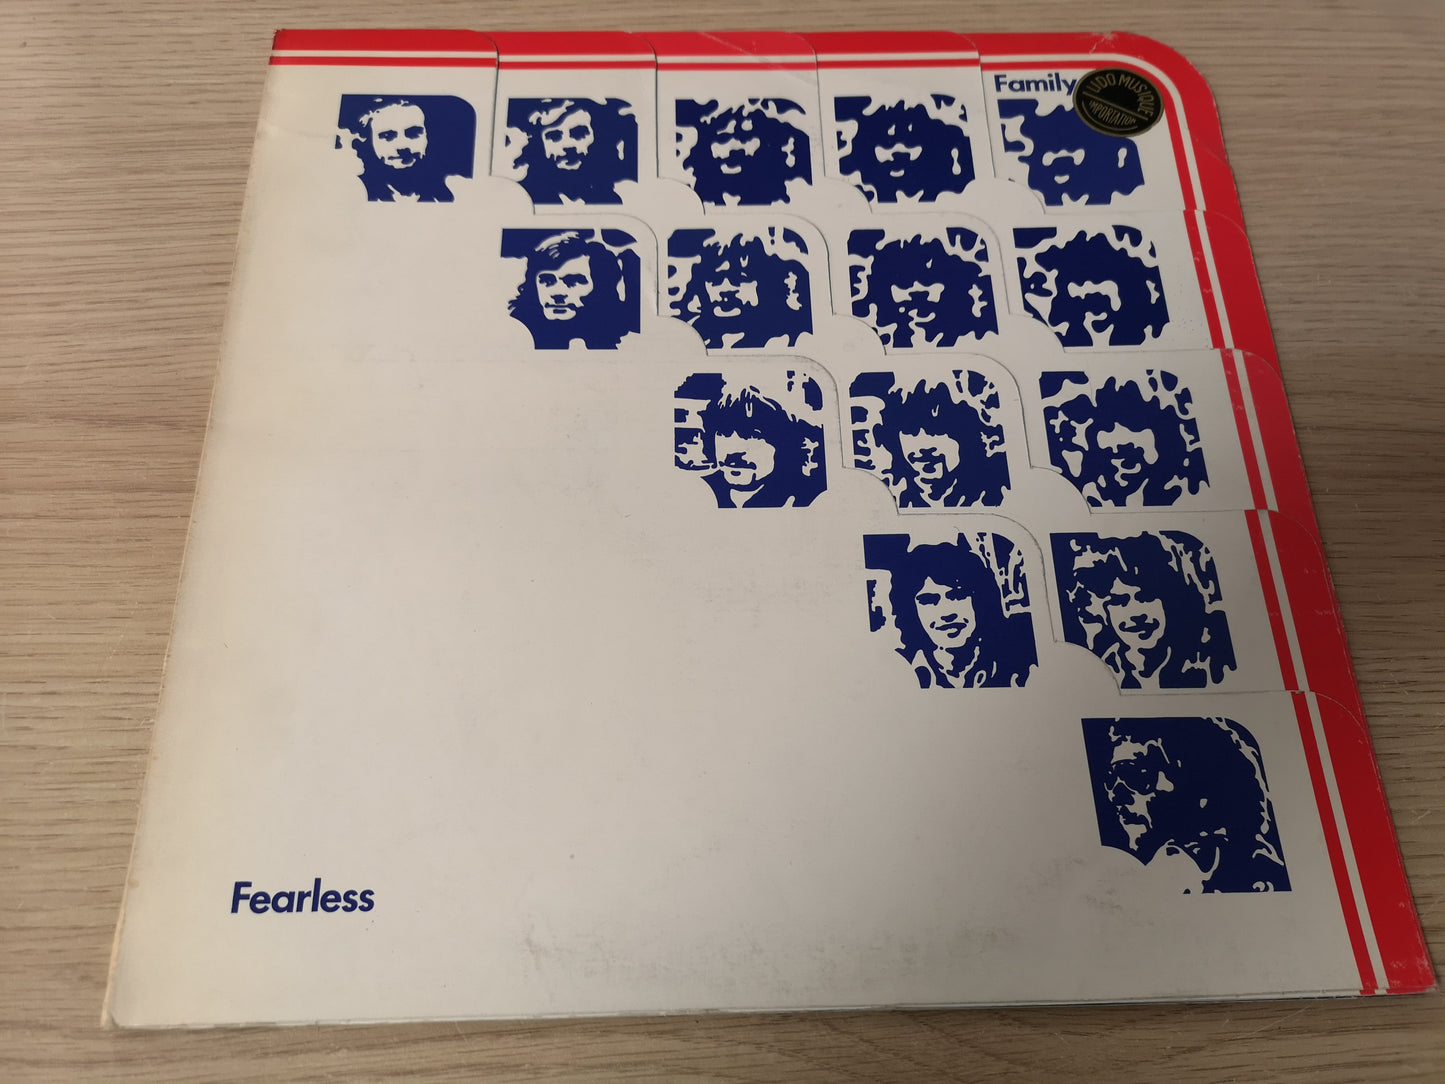 Family "Fearless" Orig UK 1971 EX/EX (w/ Lyrics Insert)